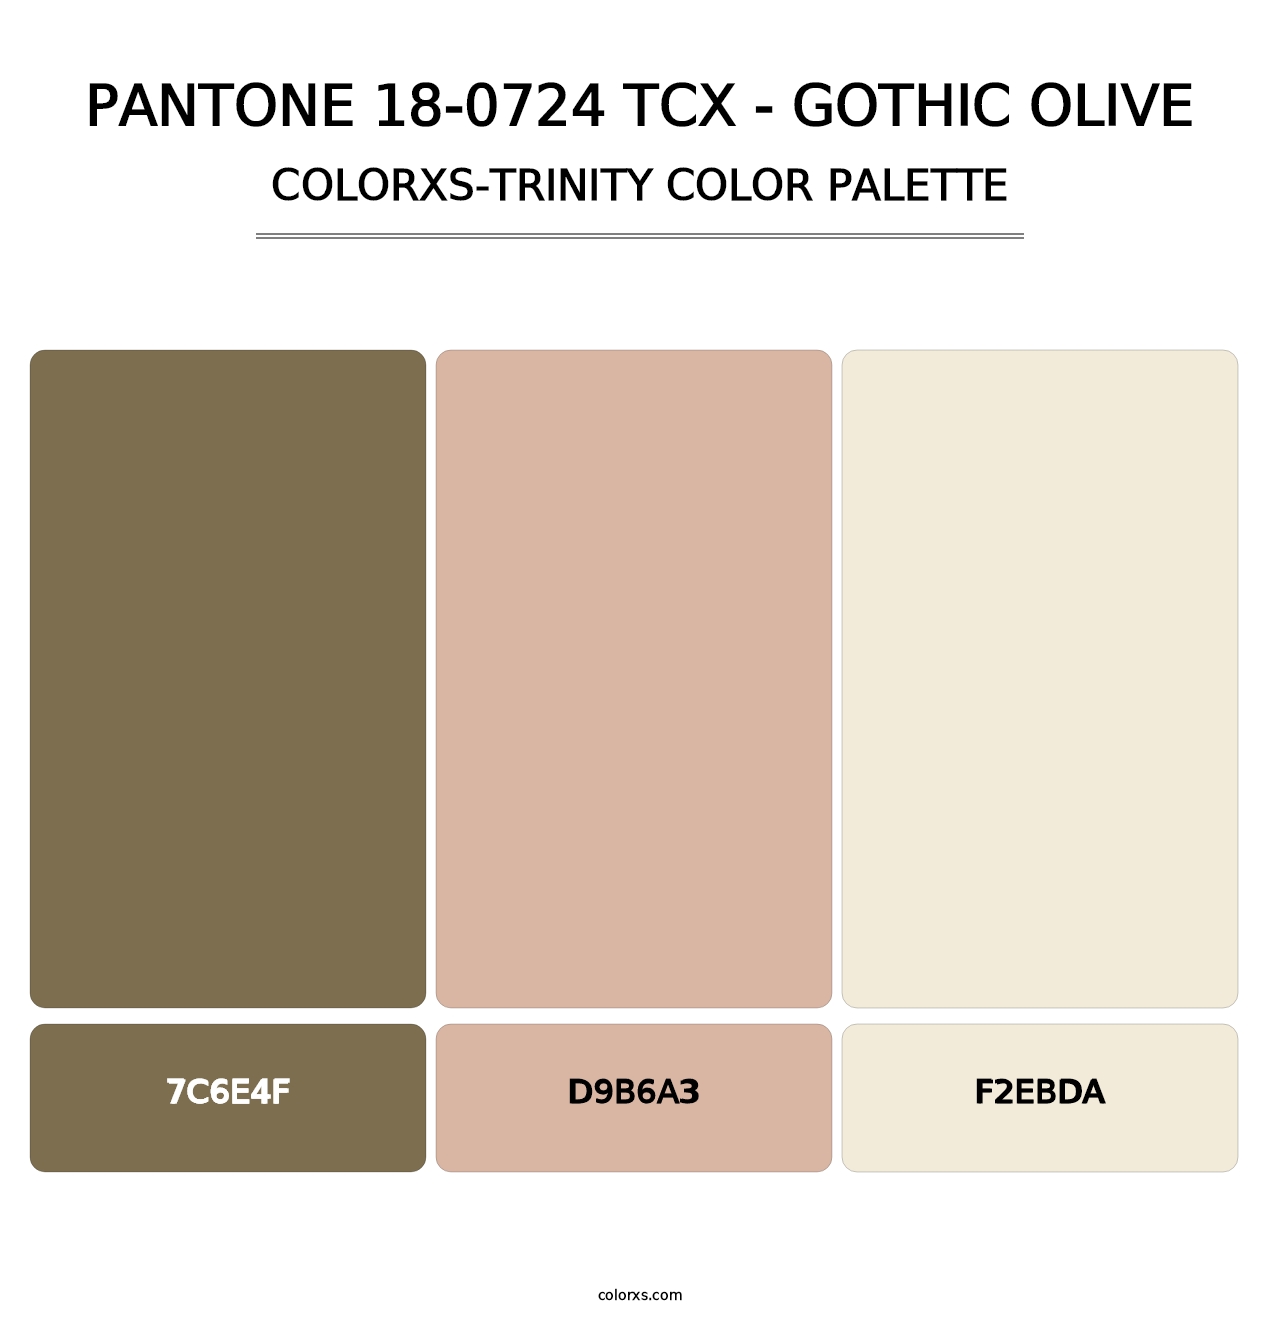 PANTONE 18-0724 TCX - Gothic Olive - Colorxs Trinity Palette